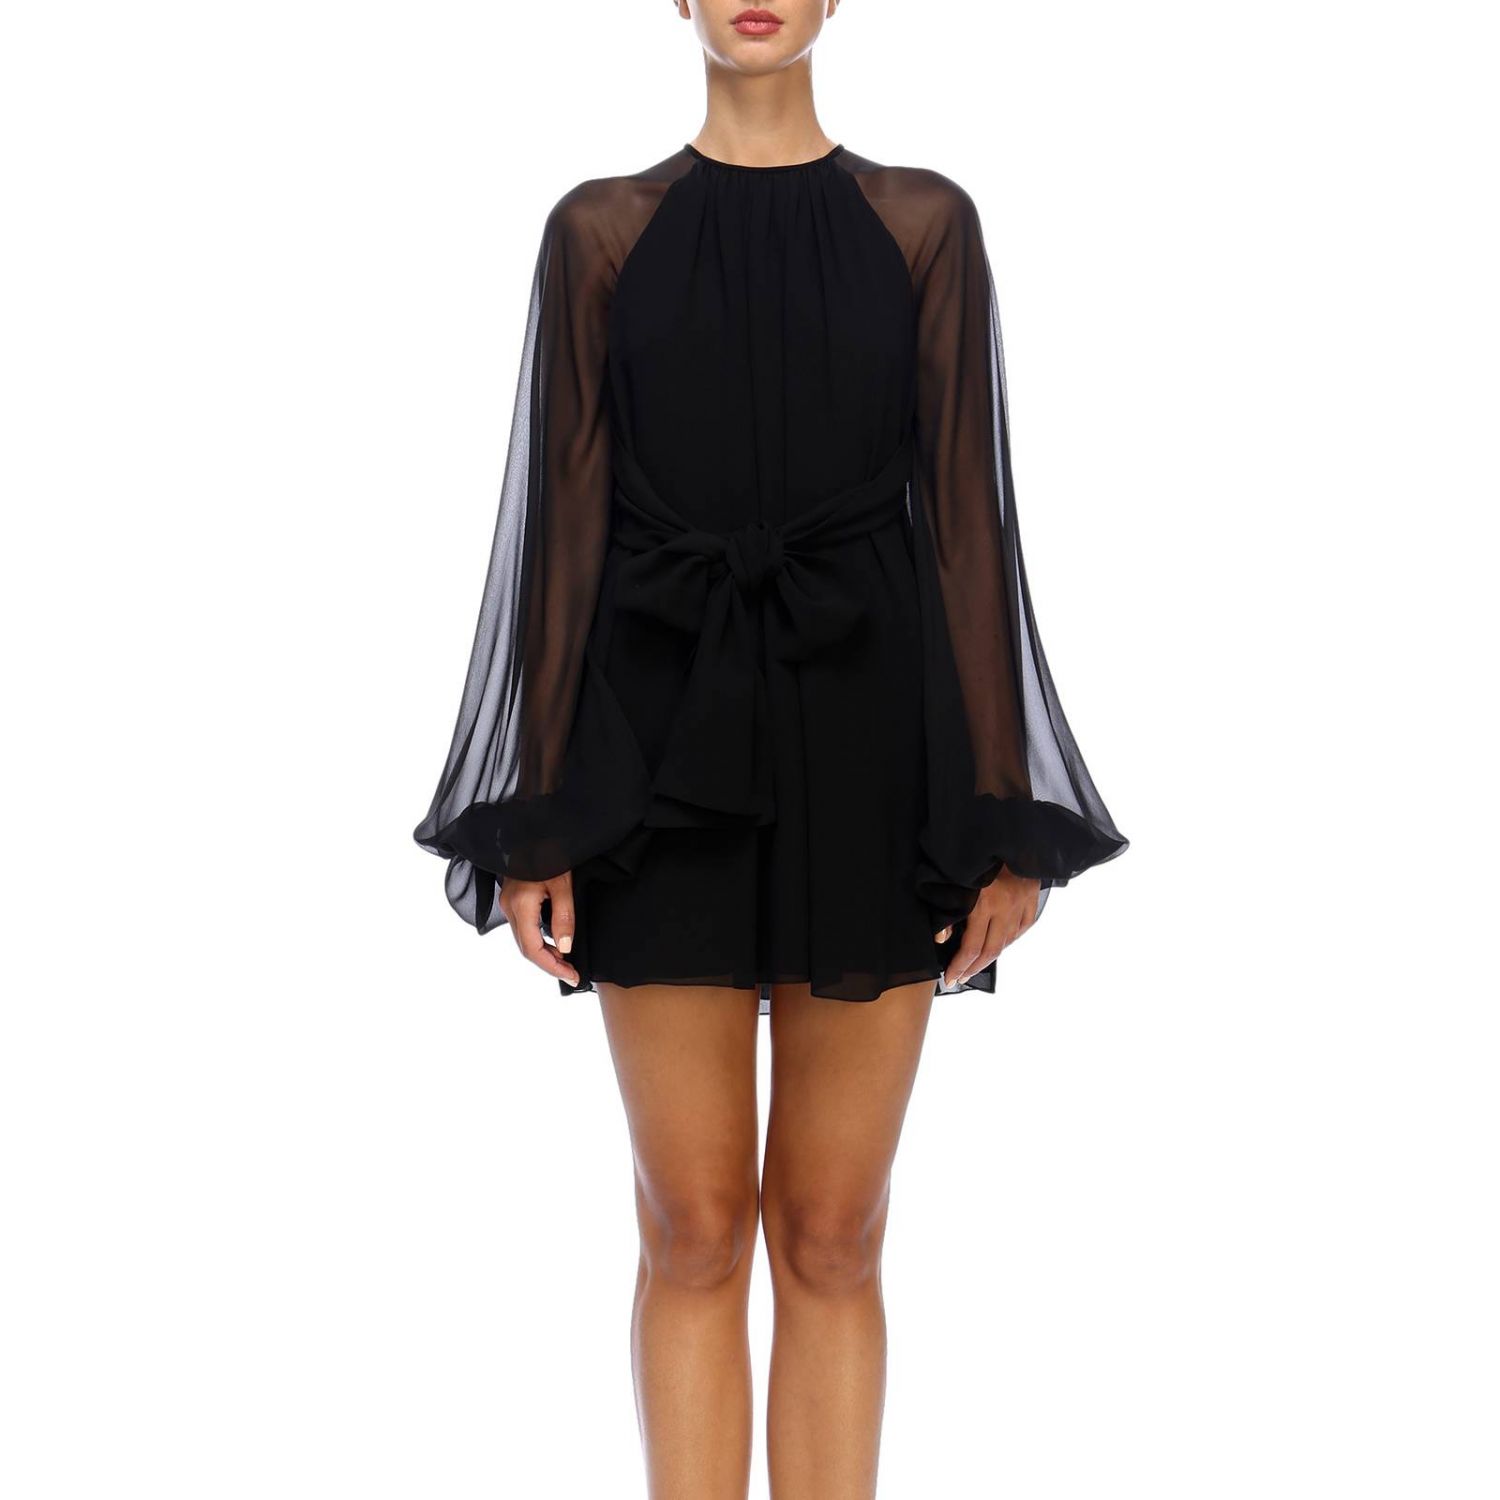 SAINT LAURENT: Dress women | Dress Saint Laurent Women Black | Dress